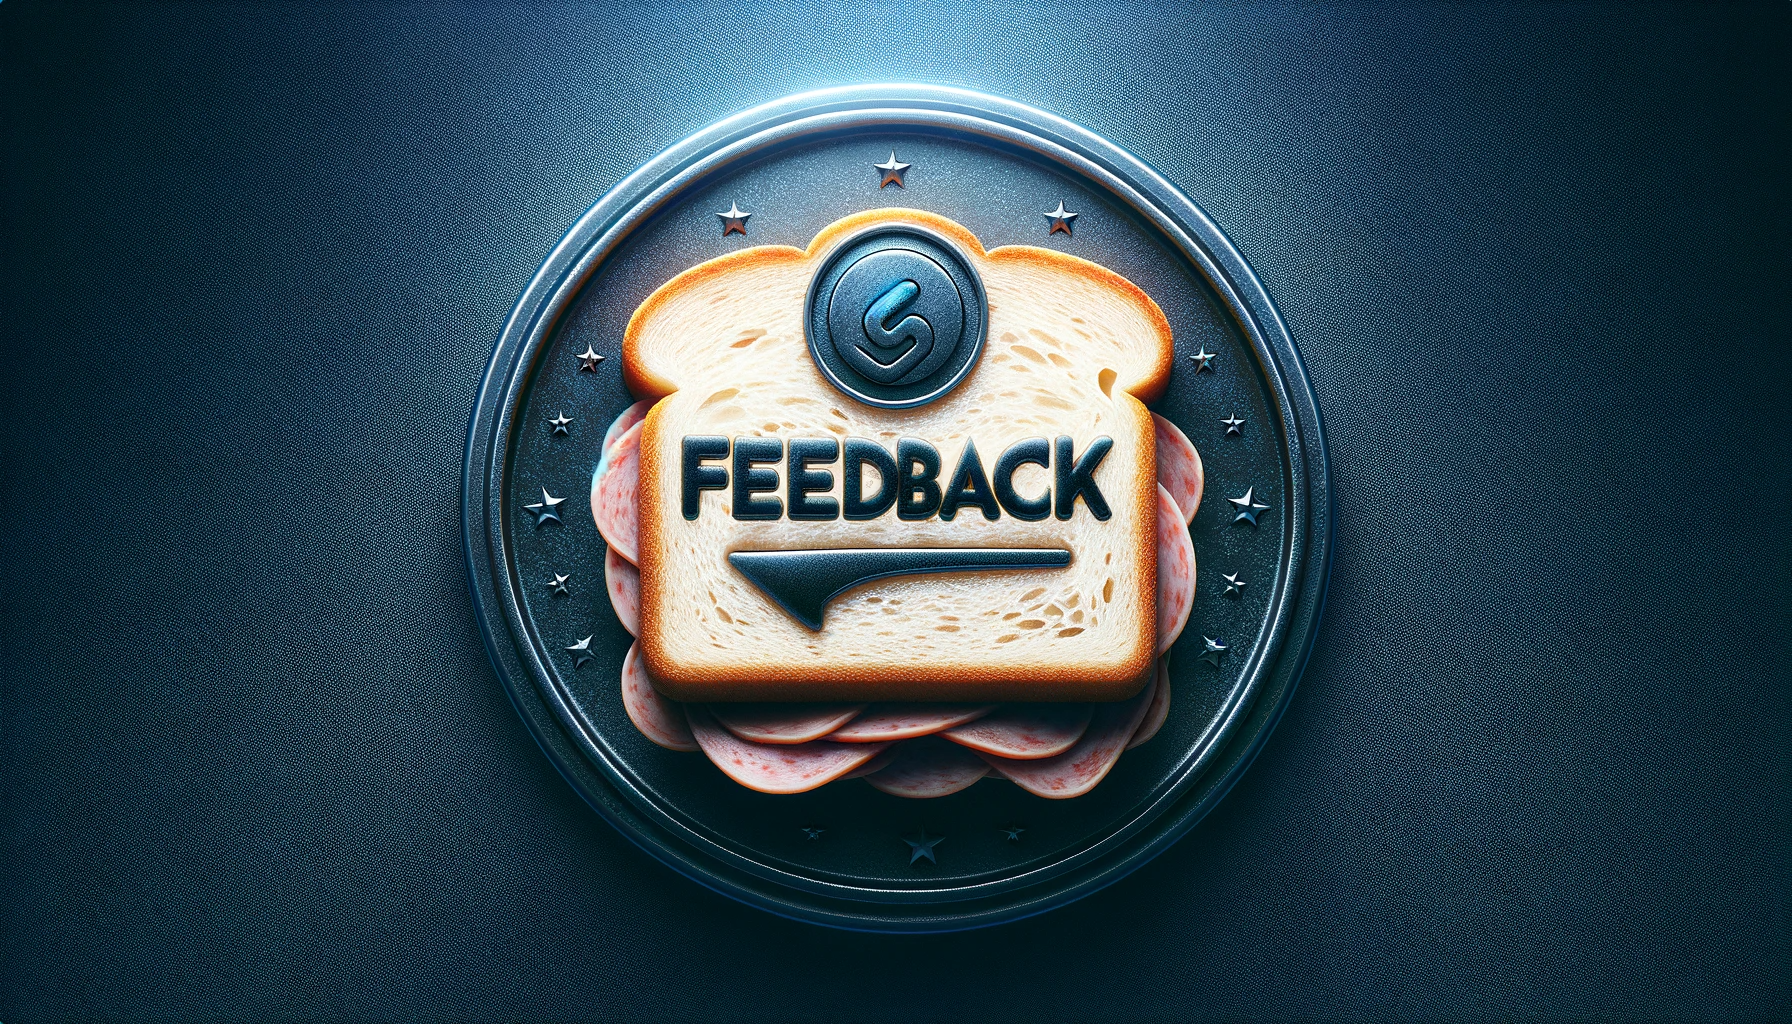 Feedback on Your Feedback: Master the Art of the Feedback Sandwich